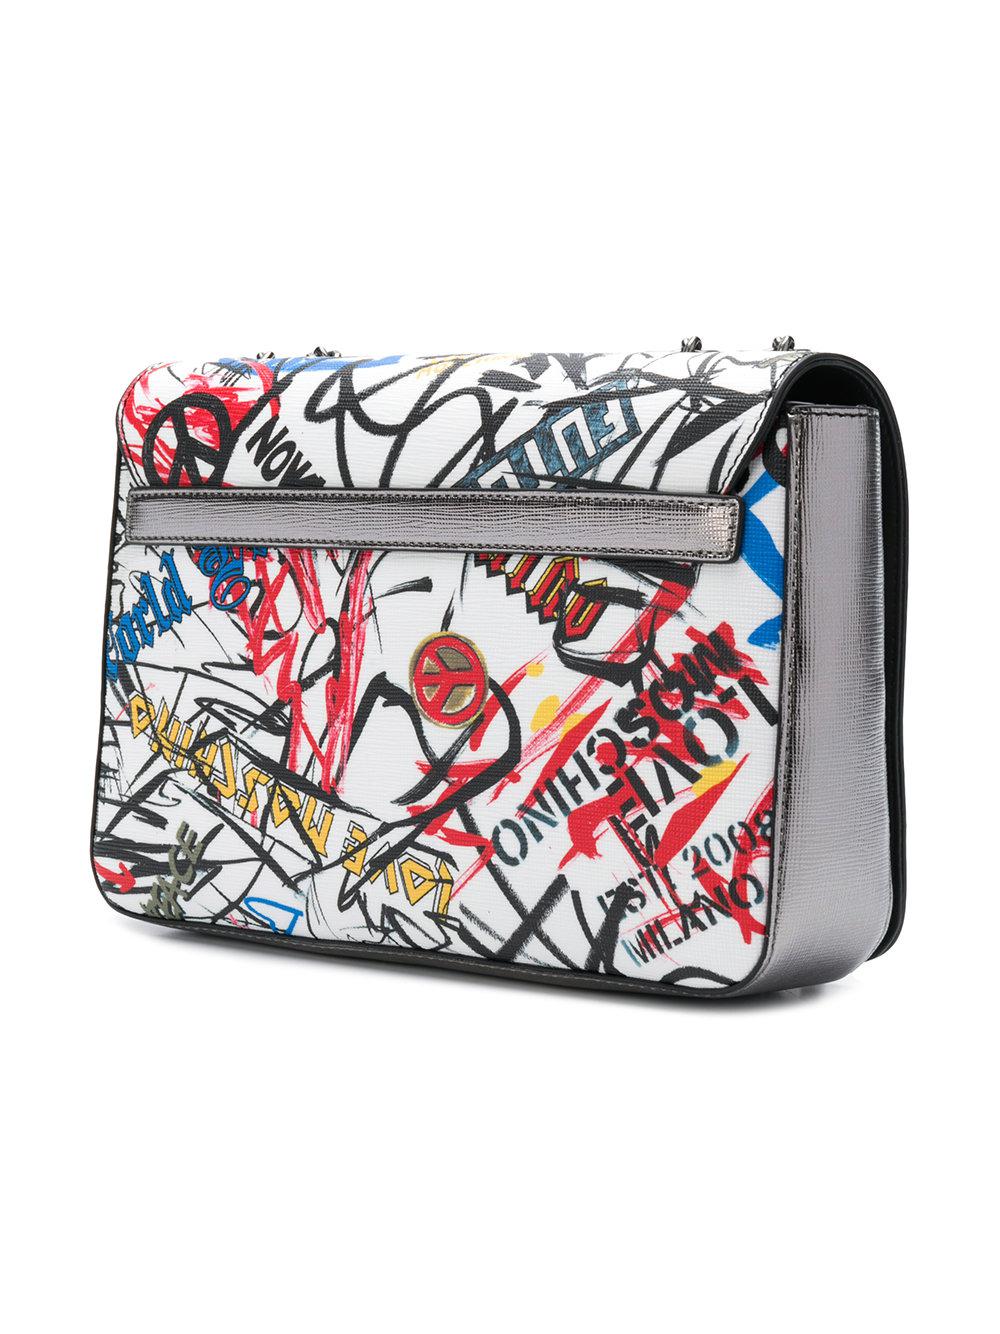 Moschino, Bags, Moschino Black White Graffiti Shoulder Bag Rare